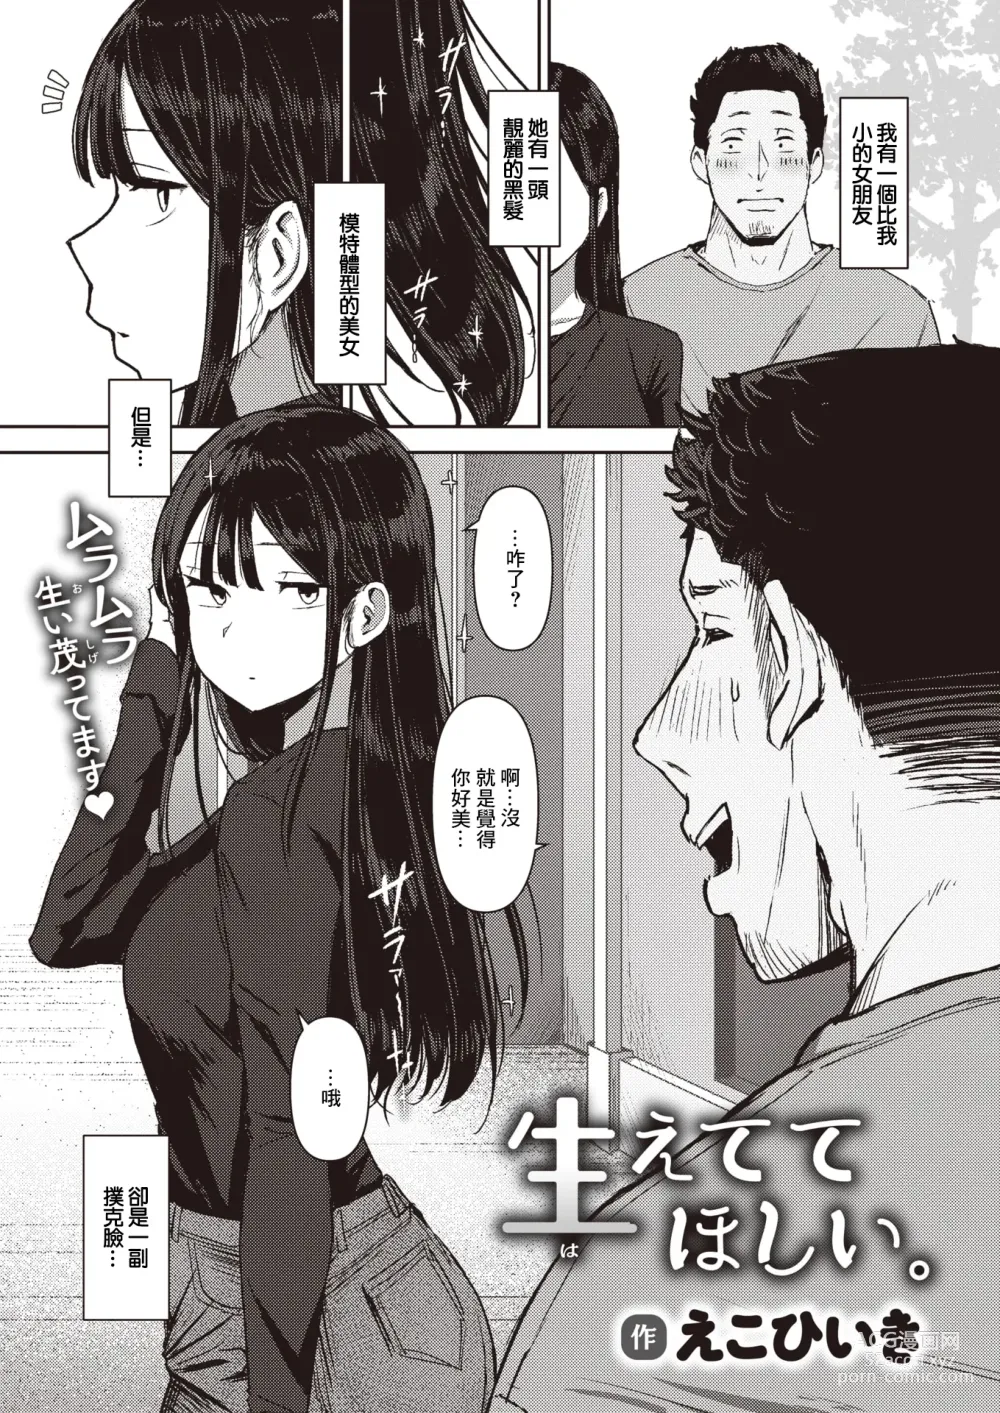 Page 2 of manga Haetete Hoshii.